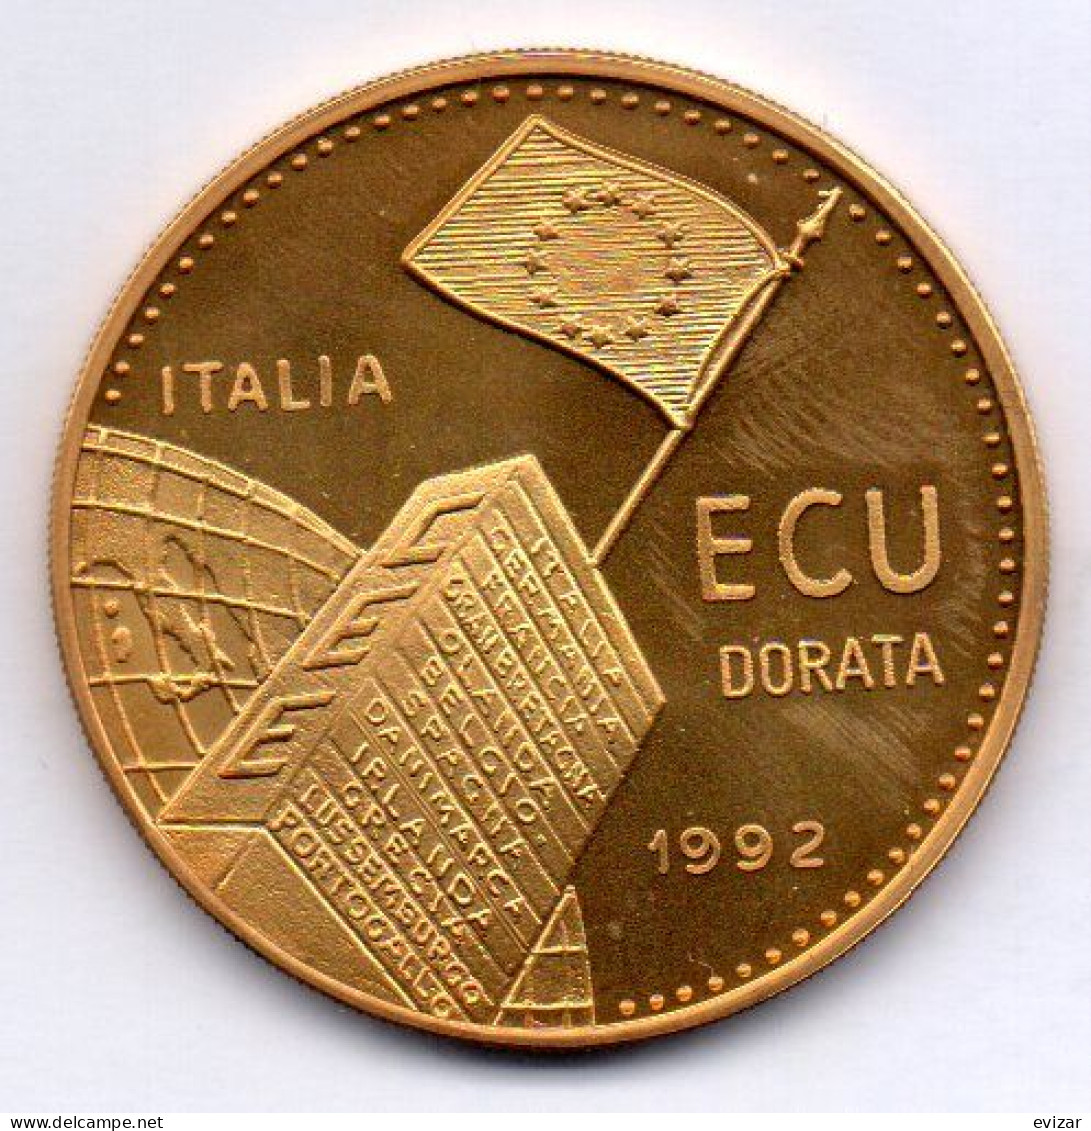 ITALIA, 1 Ecu, Copper-Nickel Gold Plated, Year 1992, # X194 - 1 000 Liras